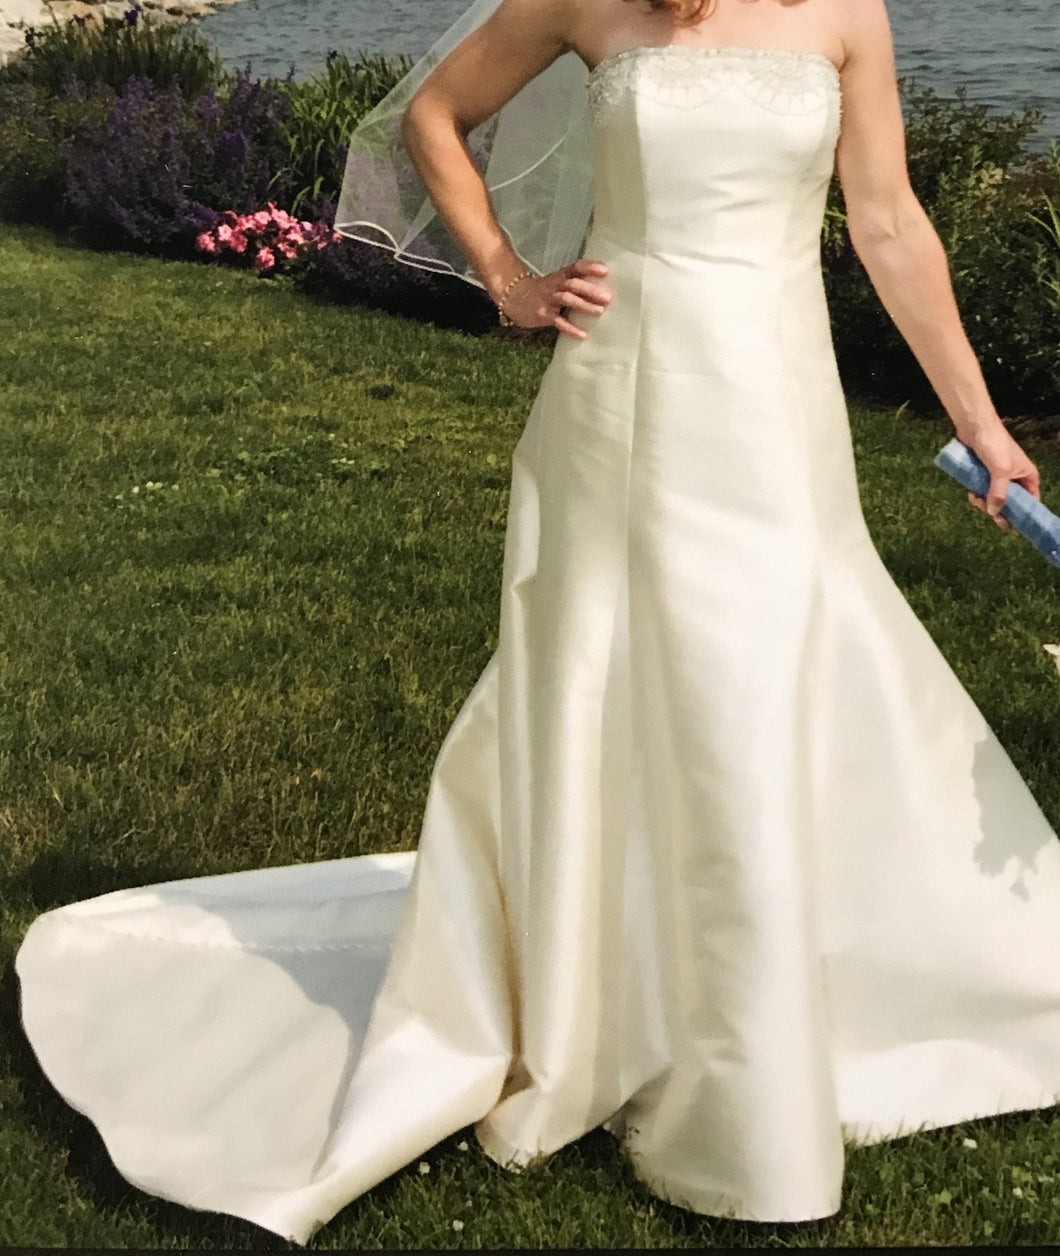 Edgardo Bonilla 'Juliet' size 2 used wedding dress front view on bride